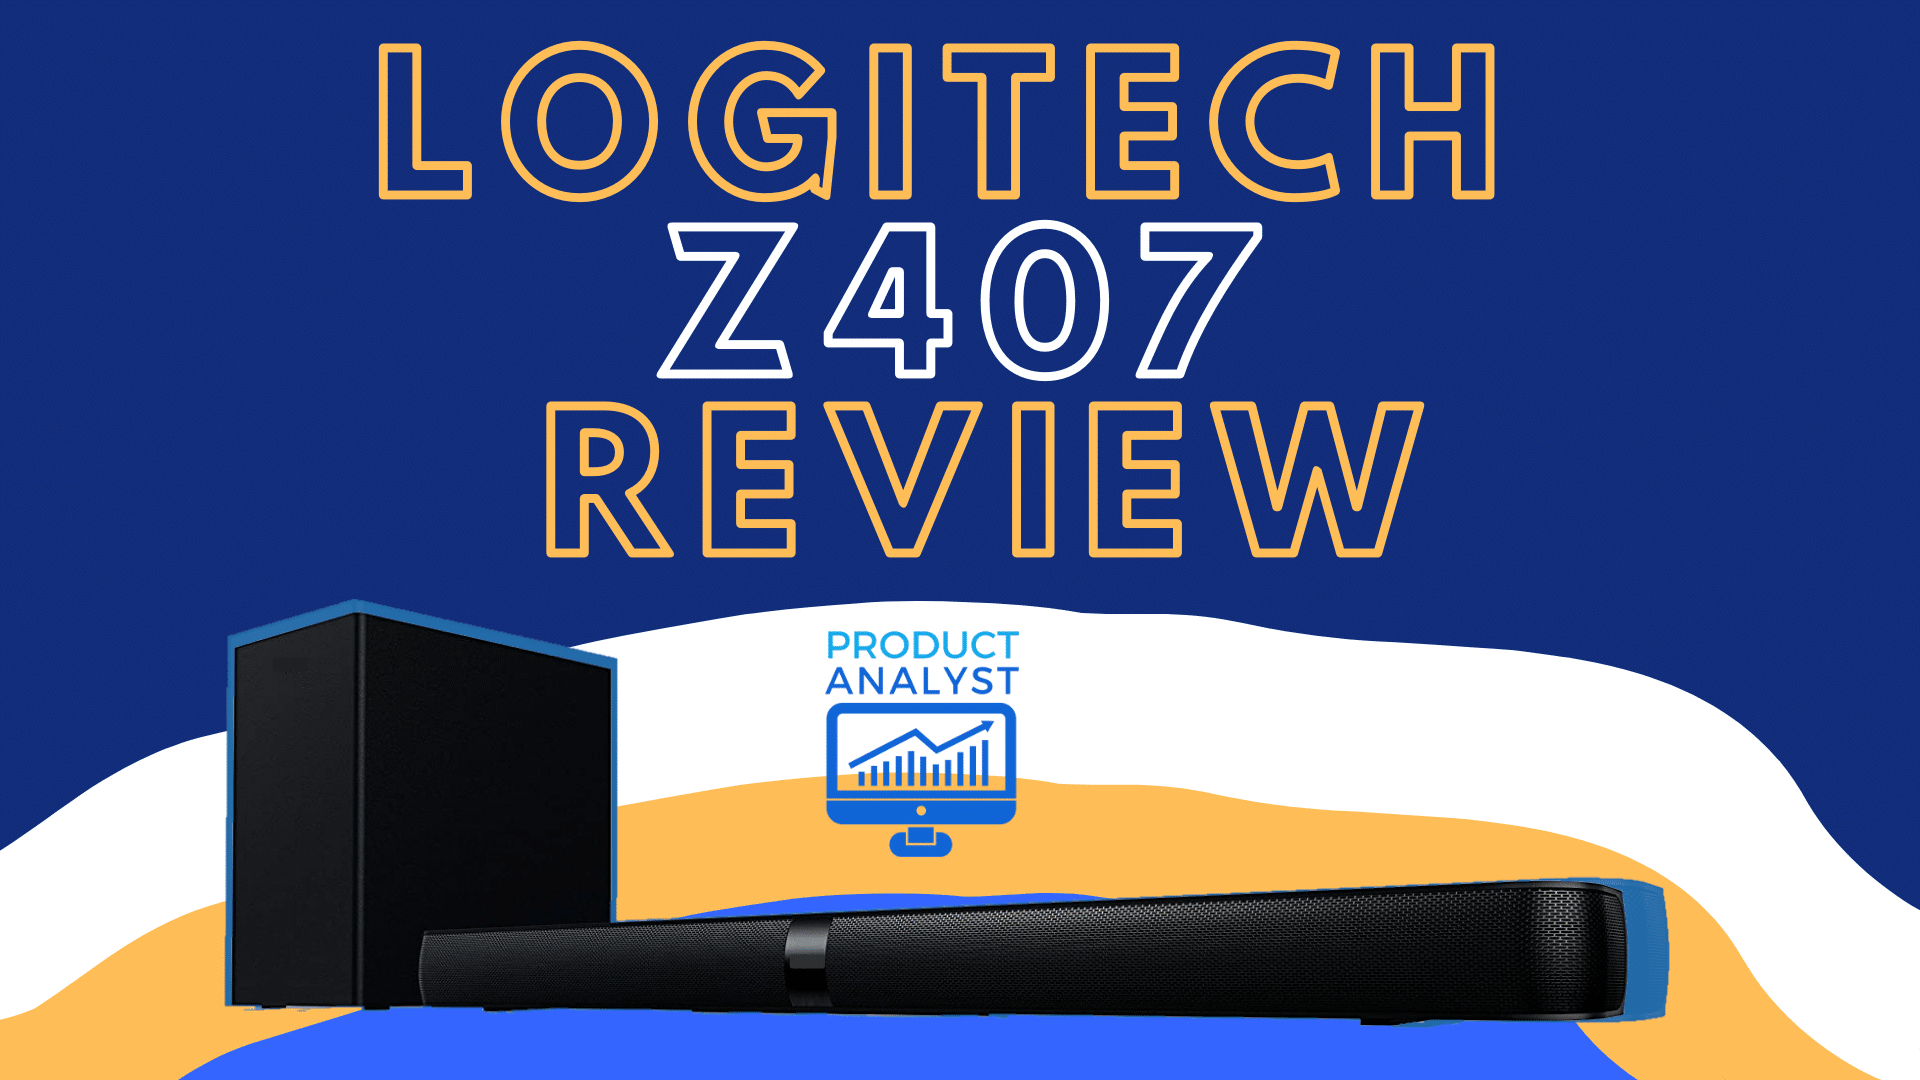 Logitech Z407 Bluetooth Speakers Review! 